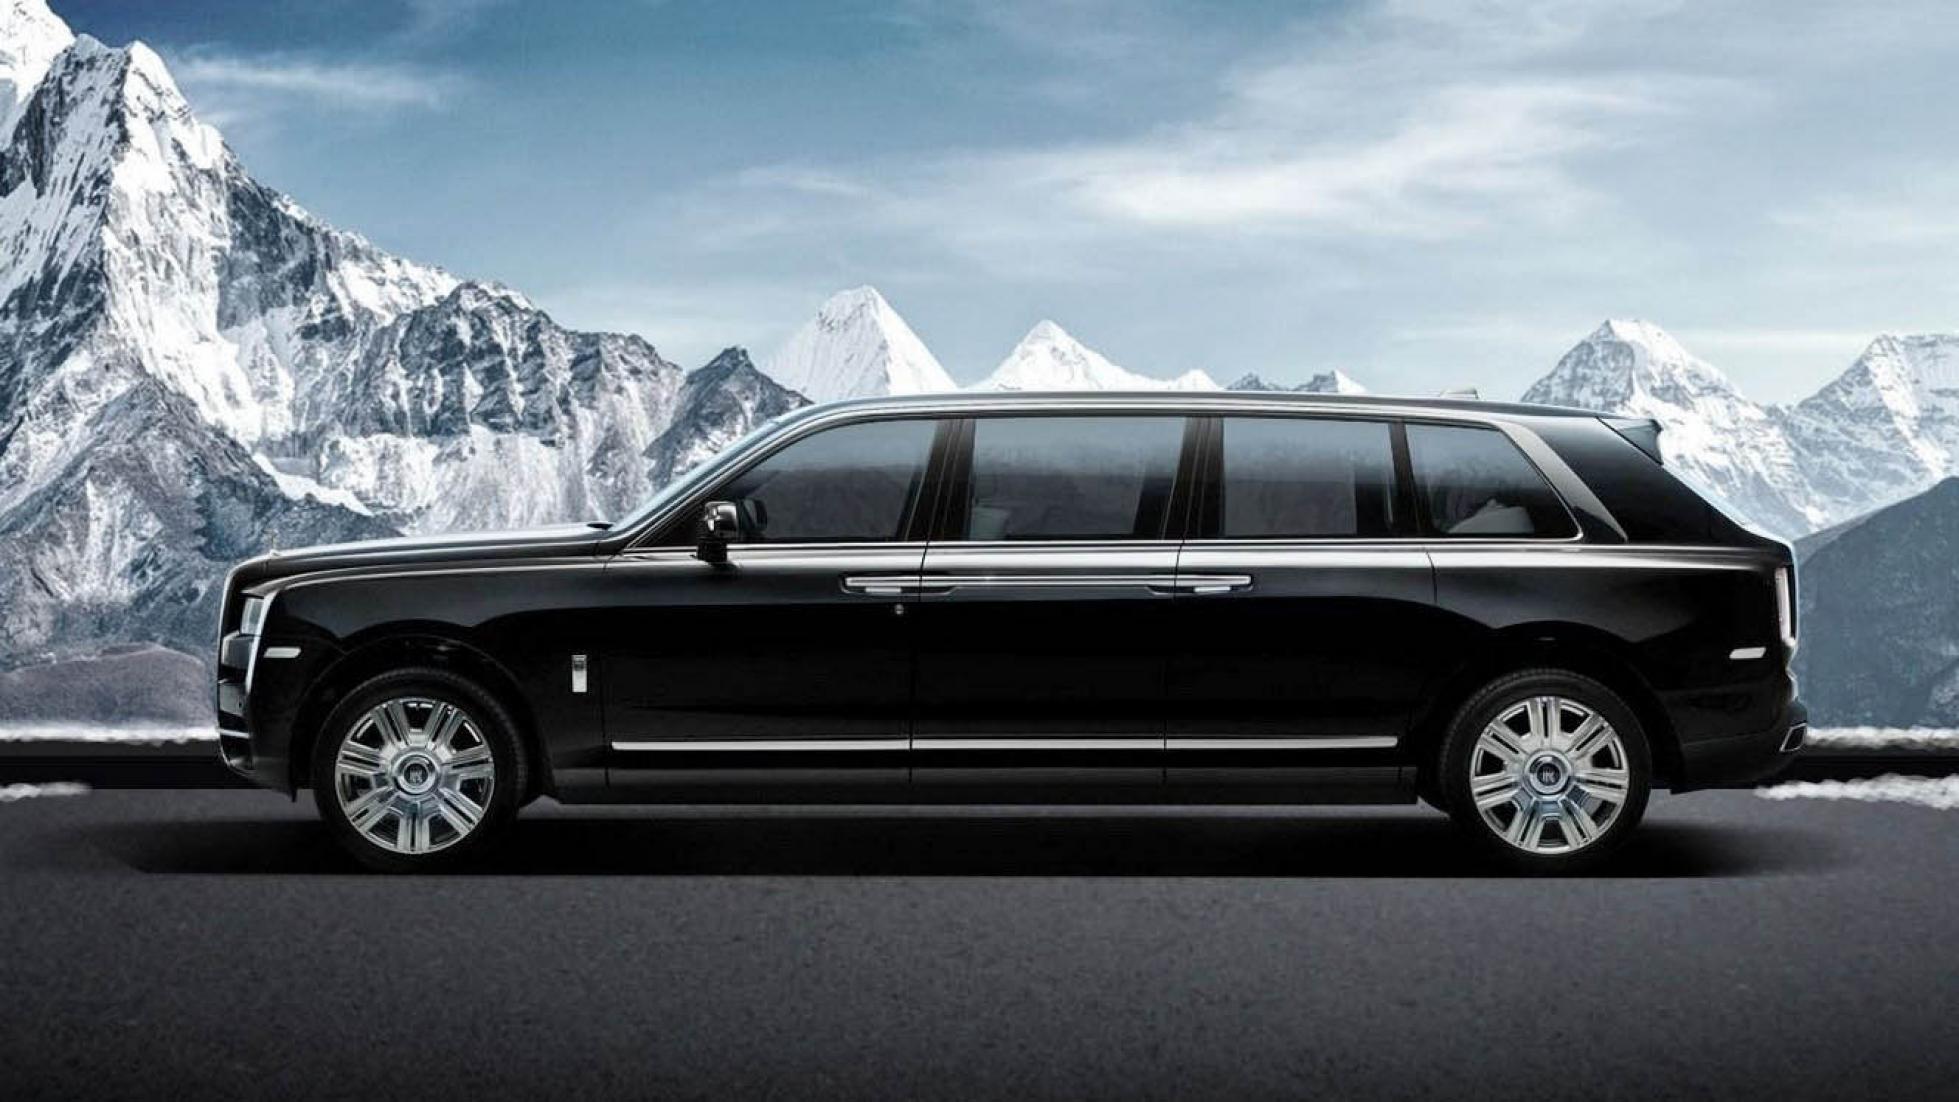 Berita, Rolls-Royce Cullinan Limousine saming: Rolls-Royce Hadirkan Limousin Cullinan Anti-Peluru Seharga 2 Juta Dollar